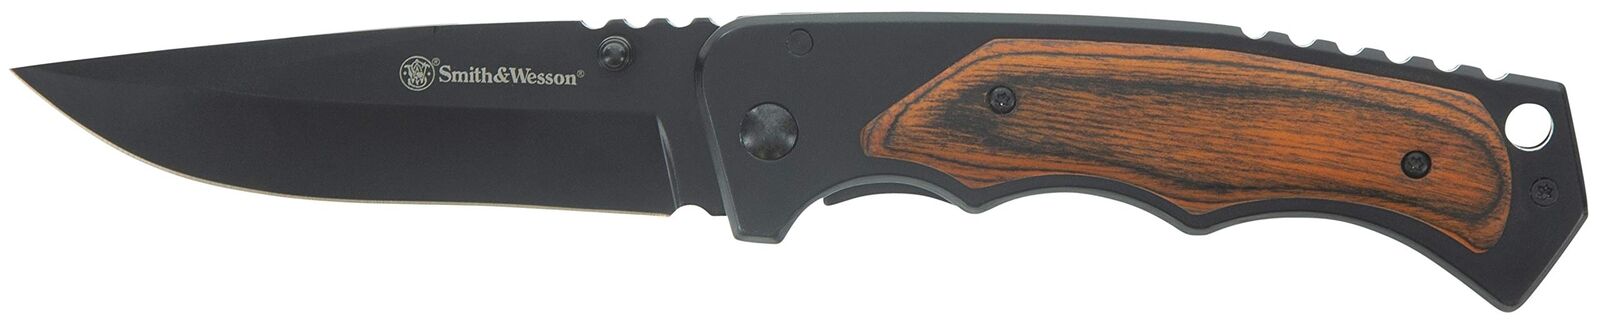 New Smith & Wesson Framelock Folding Poket Knife 1147091